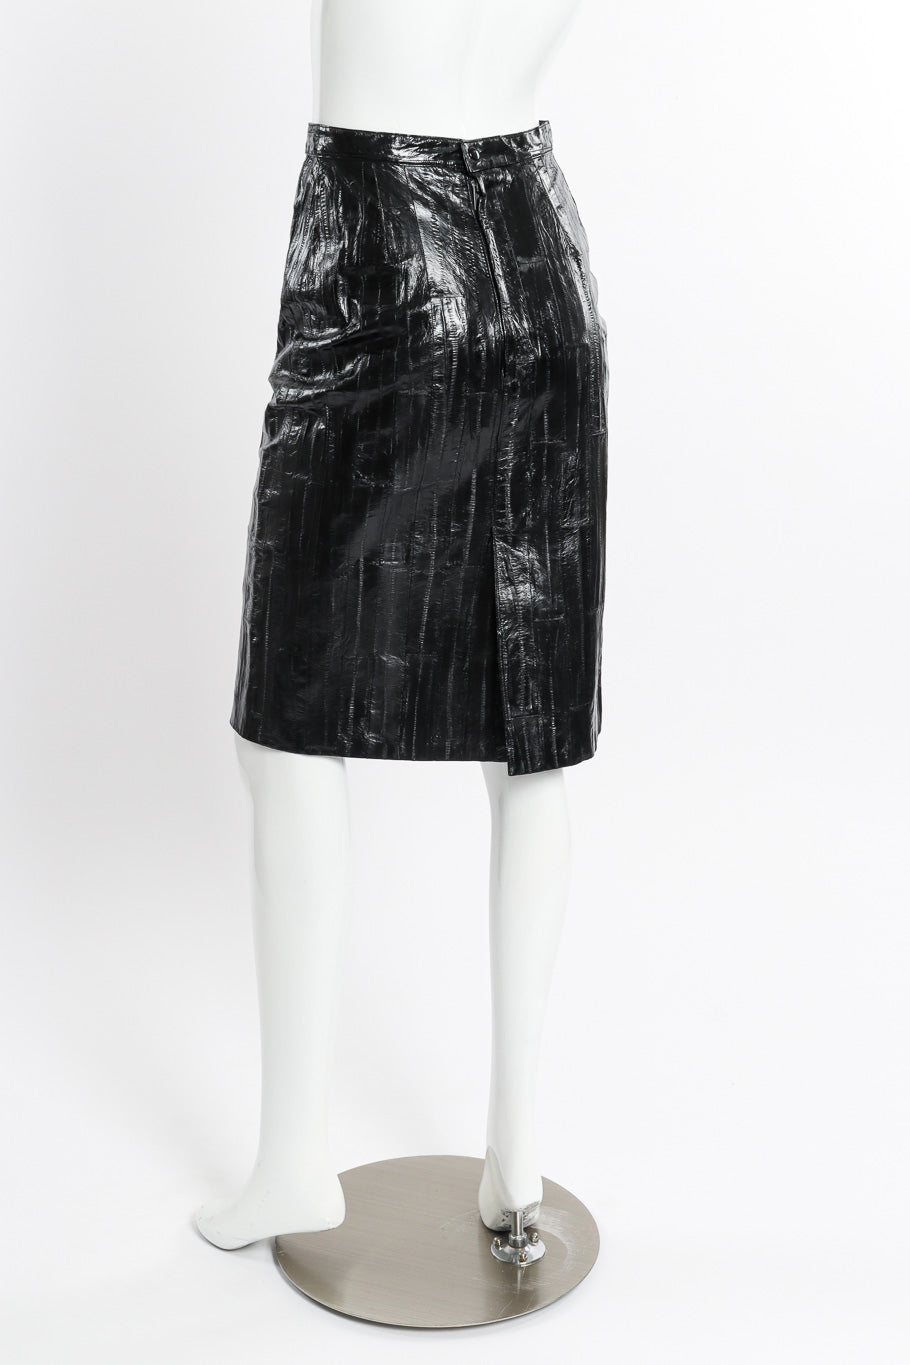 Vintage Krizia Eel Patent Leather Skirt back view on mannequin @recessla